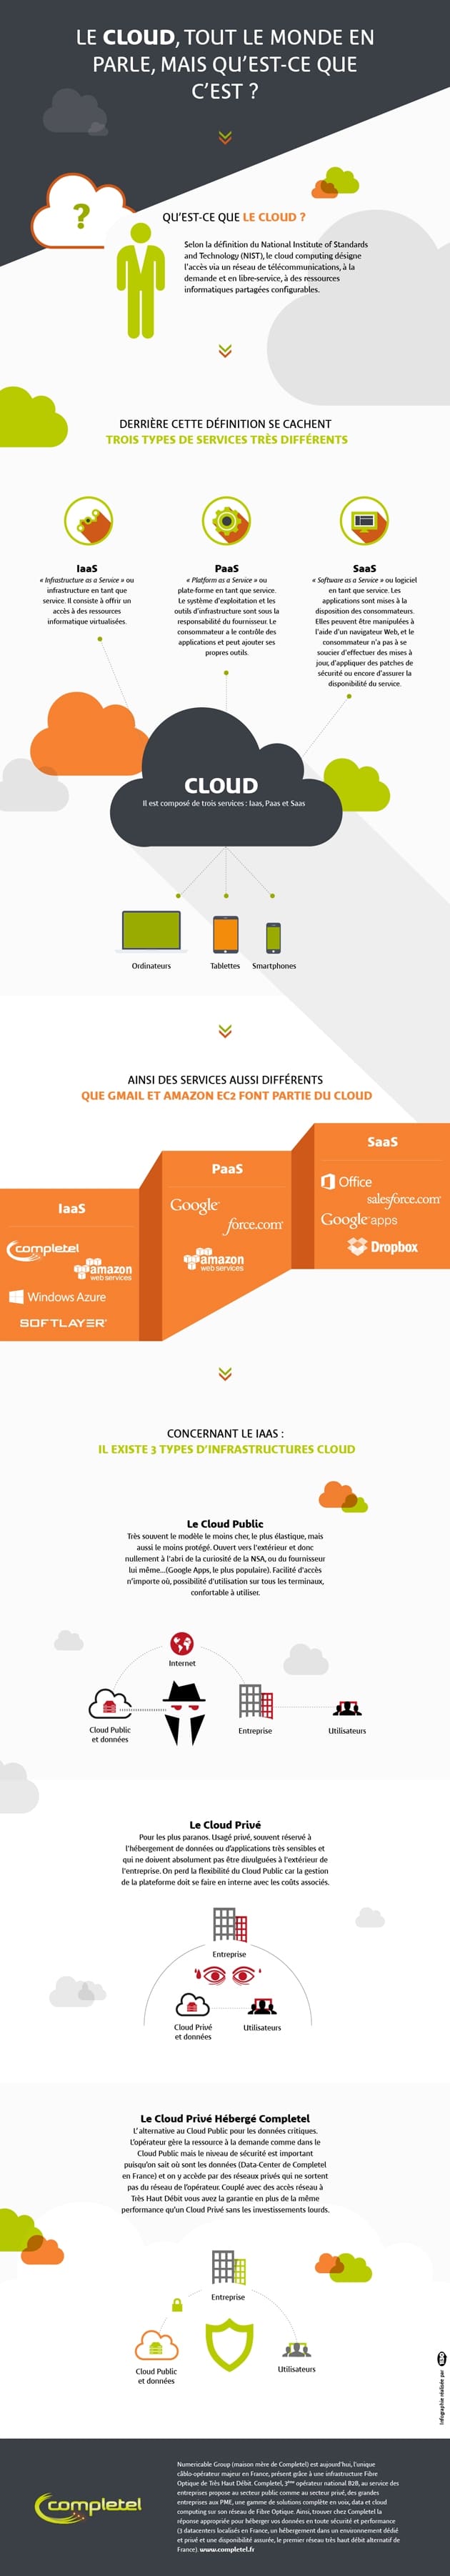 Infographie Cloud Completel